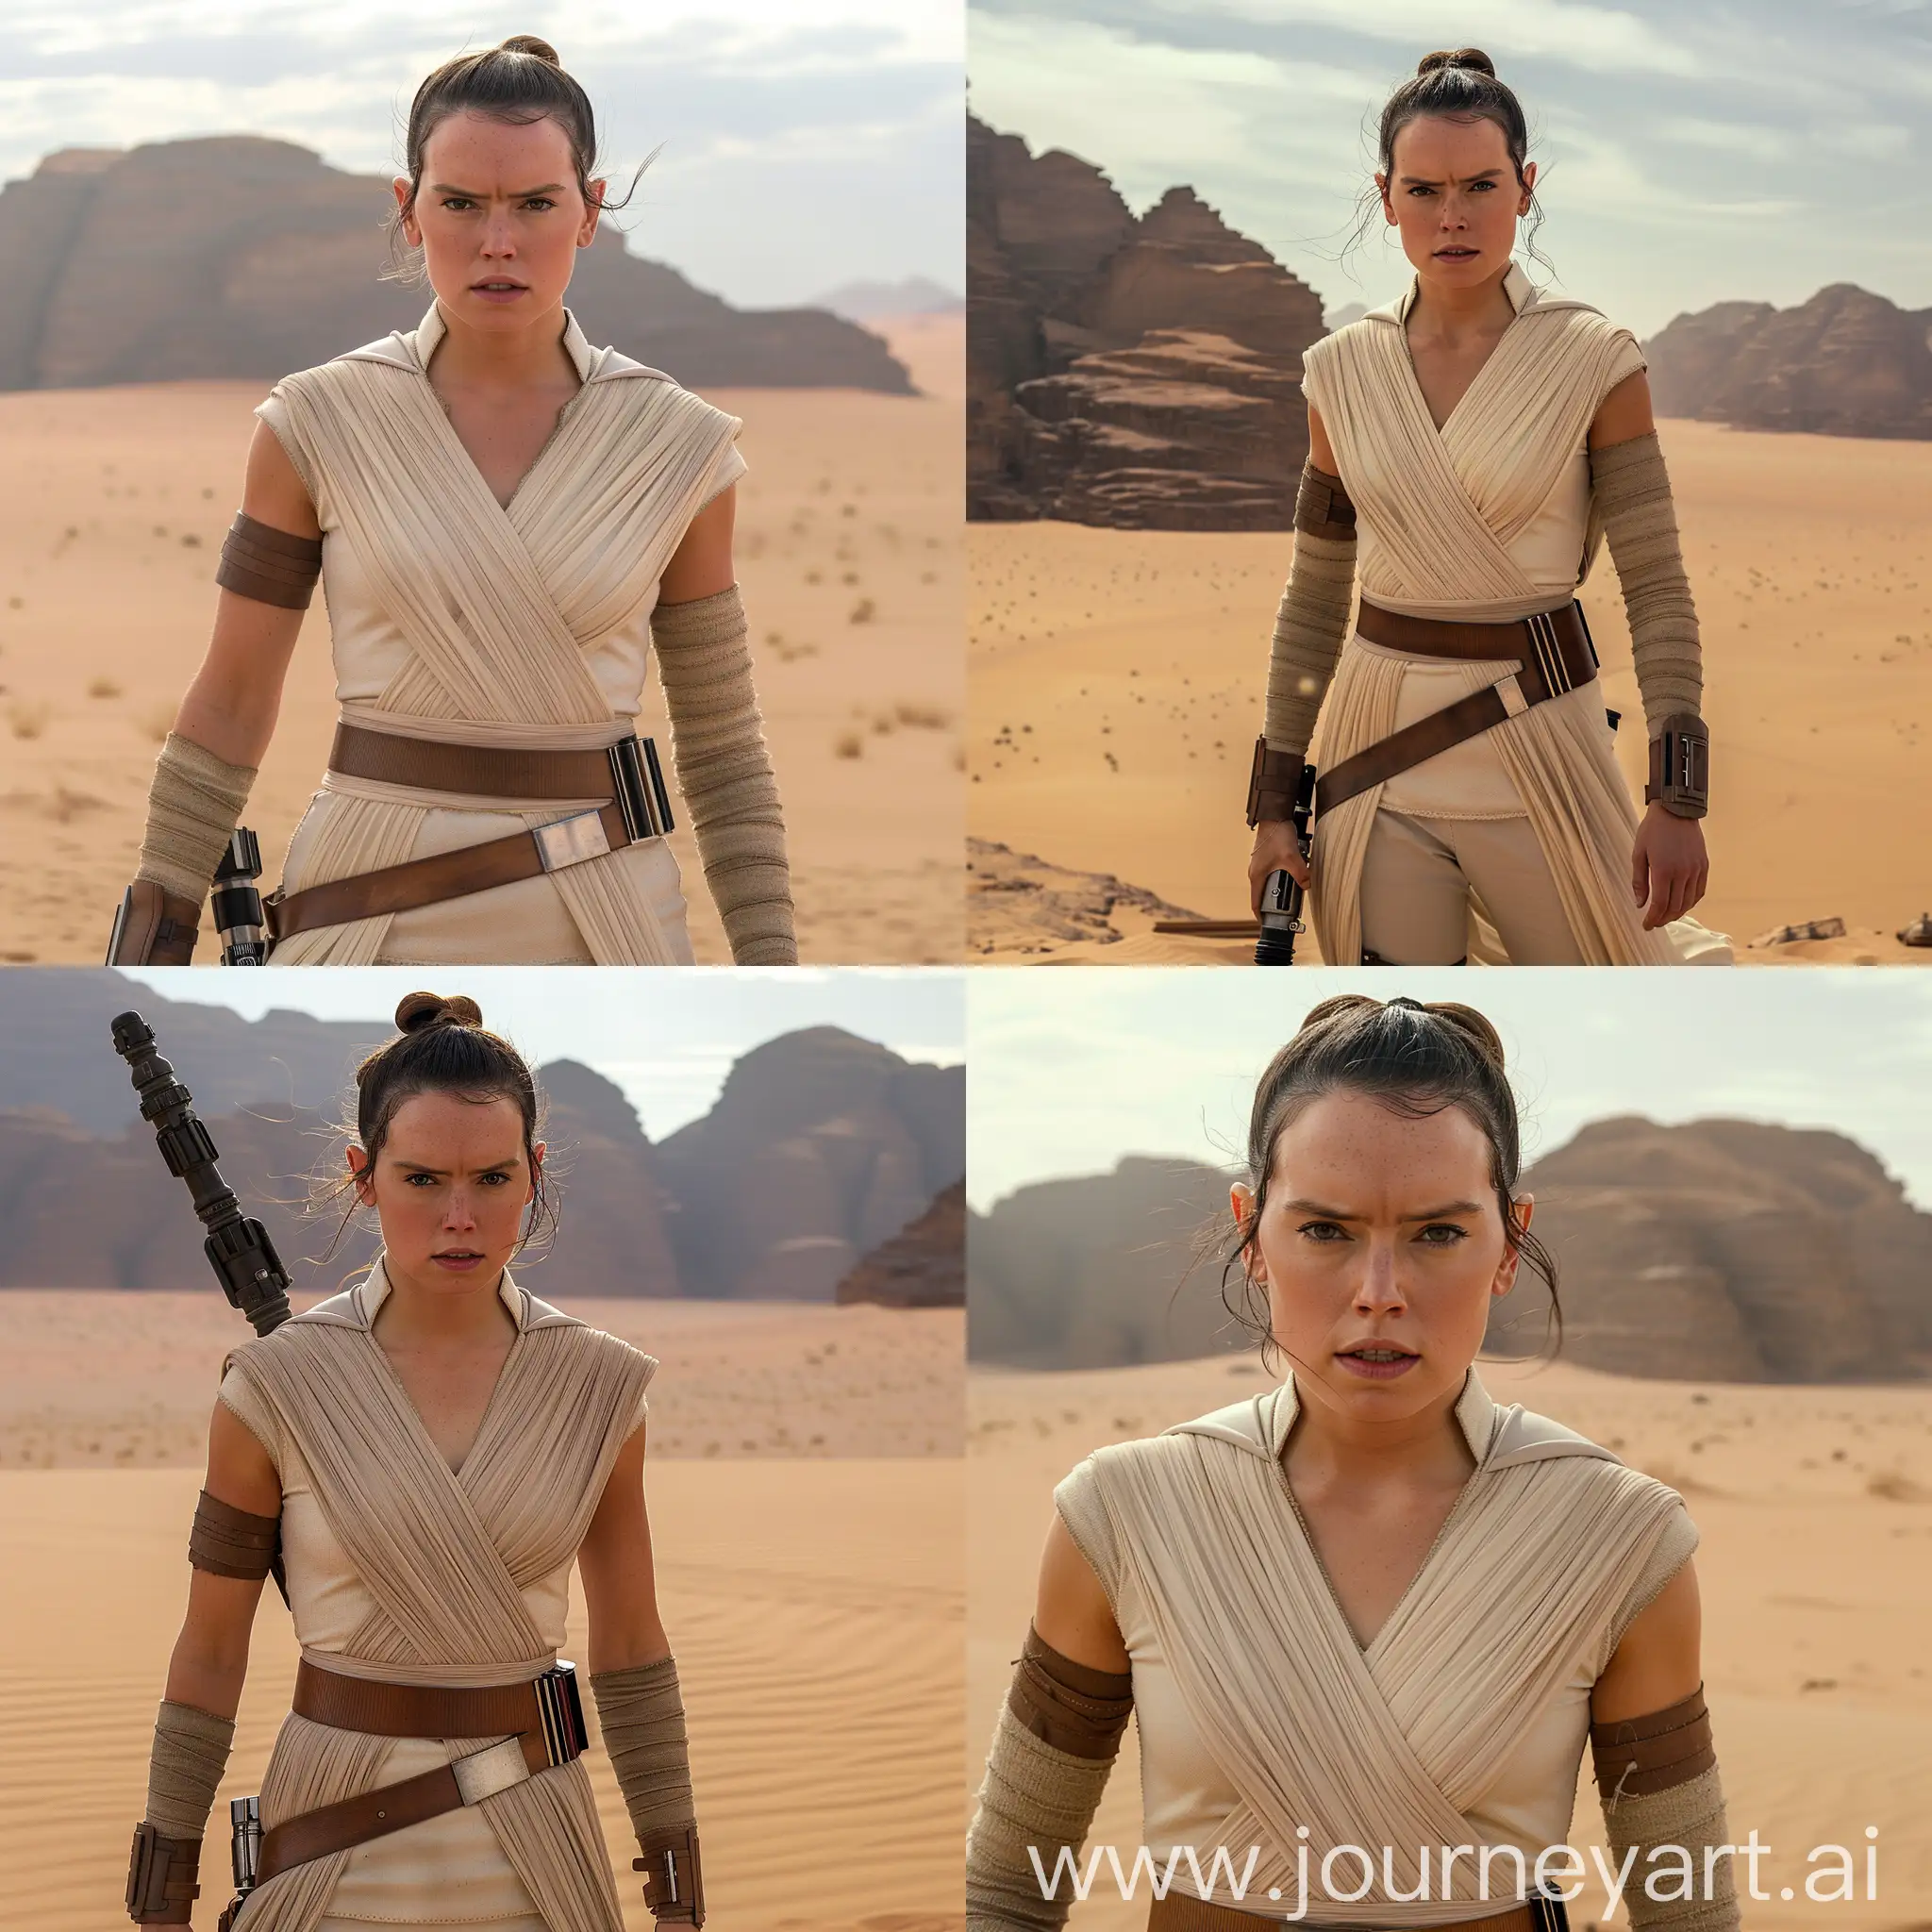 Rey-Skywalker-Standing-Alone-in-the-Desert-at-8K-Resolution